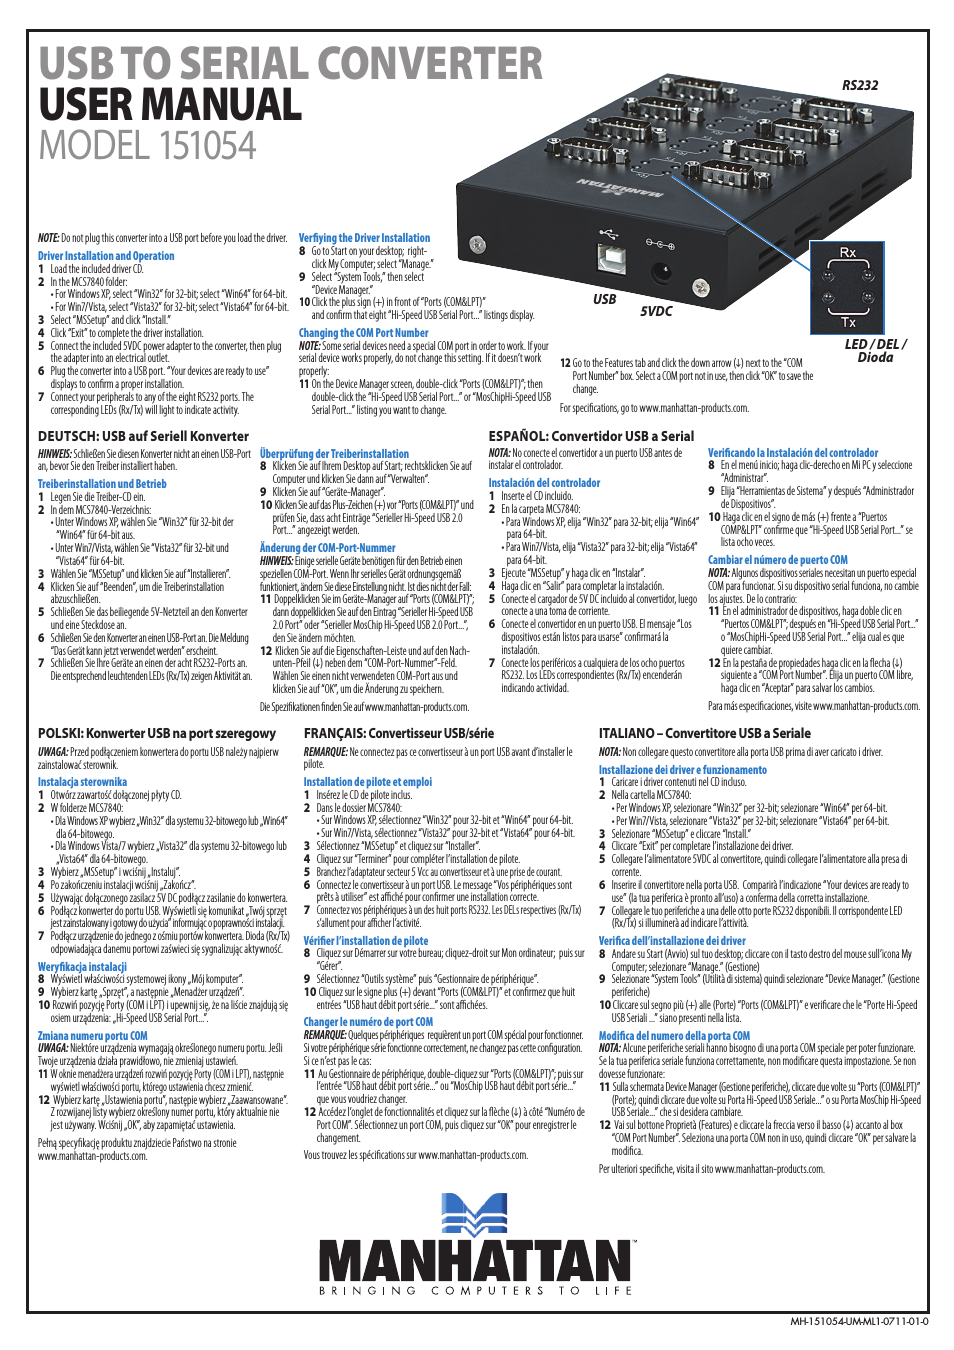 151054 USB to Serial Converter - Manual (Multi)